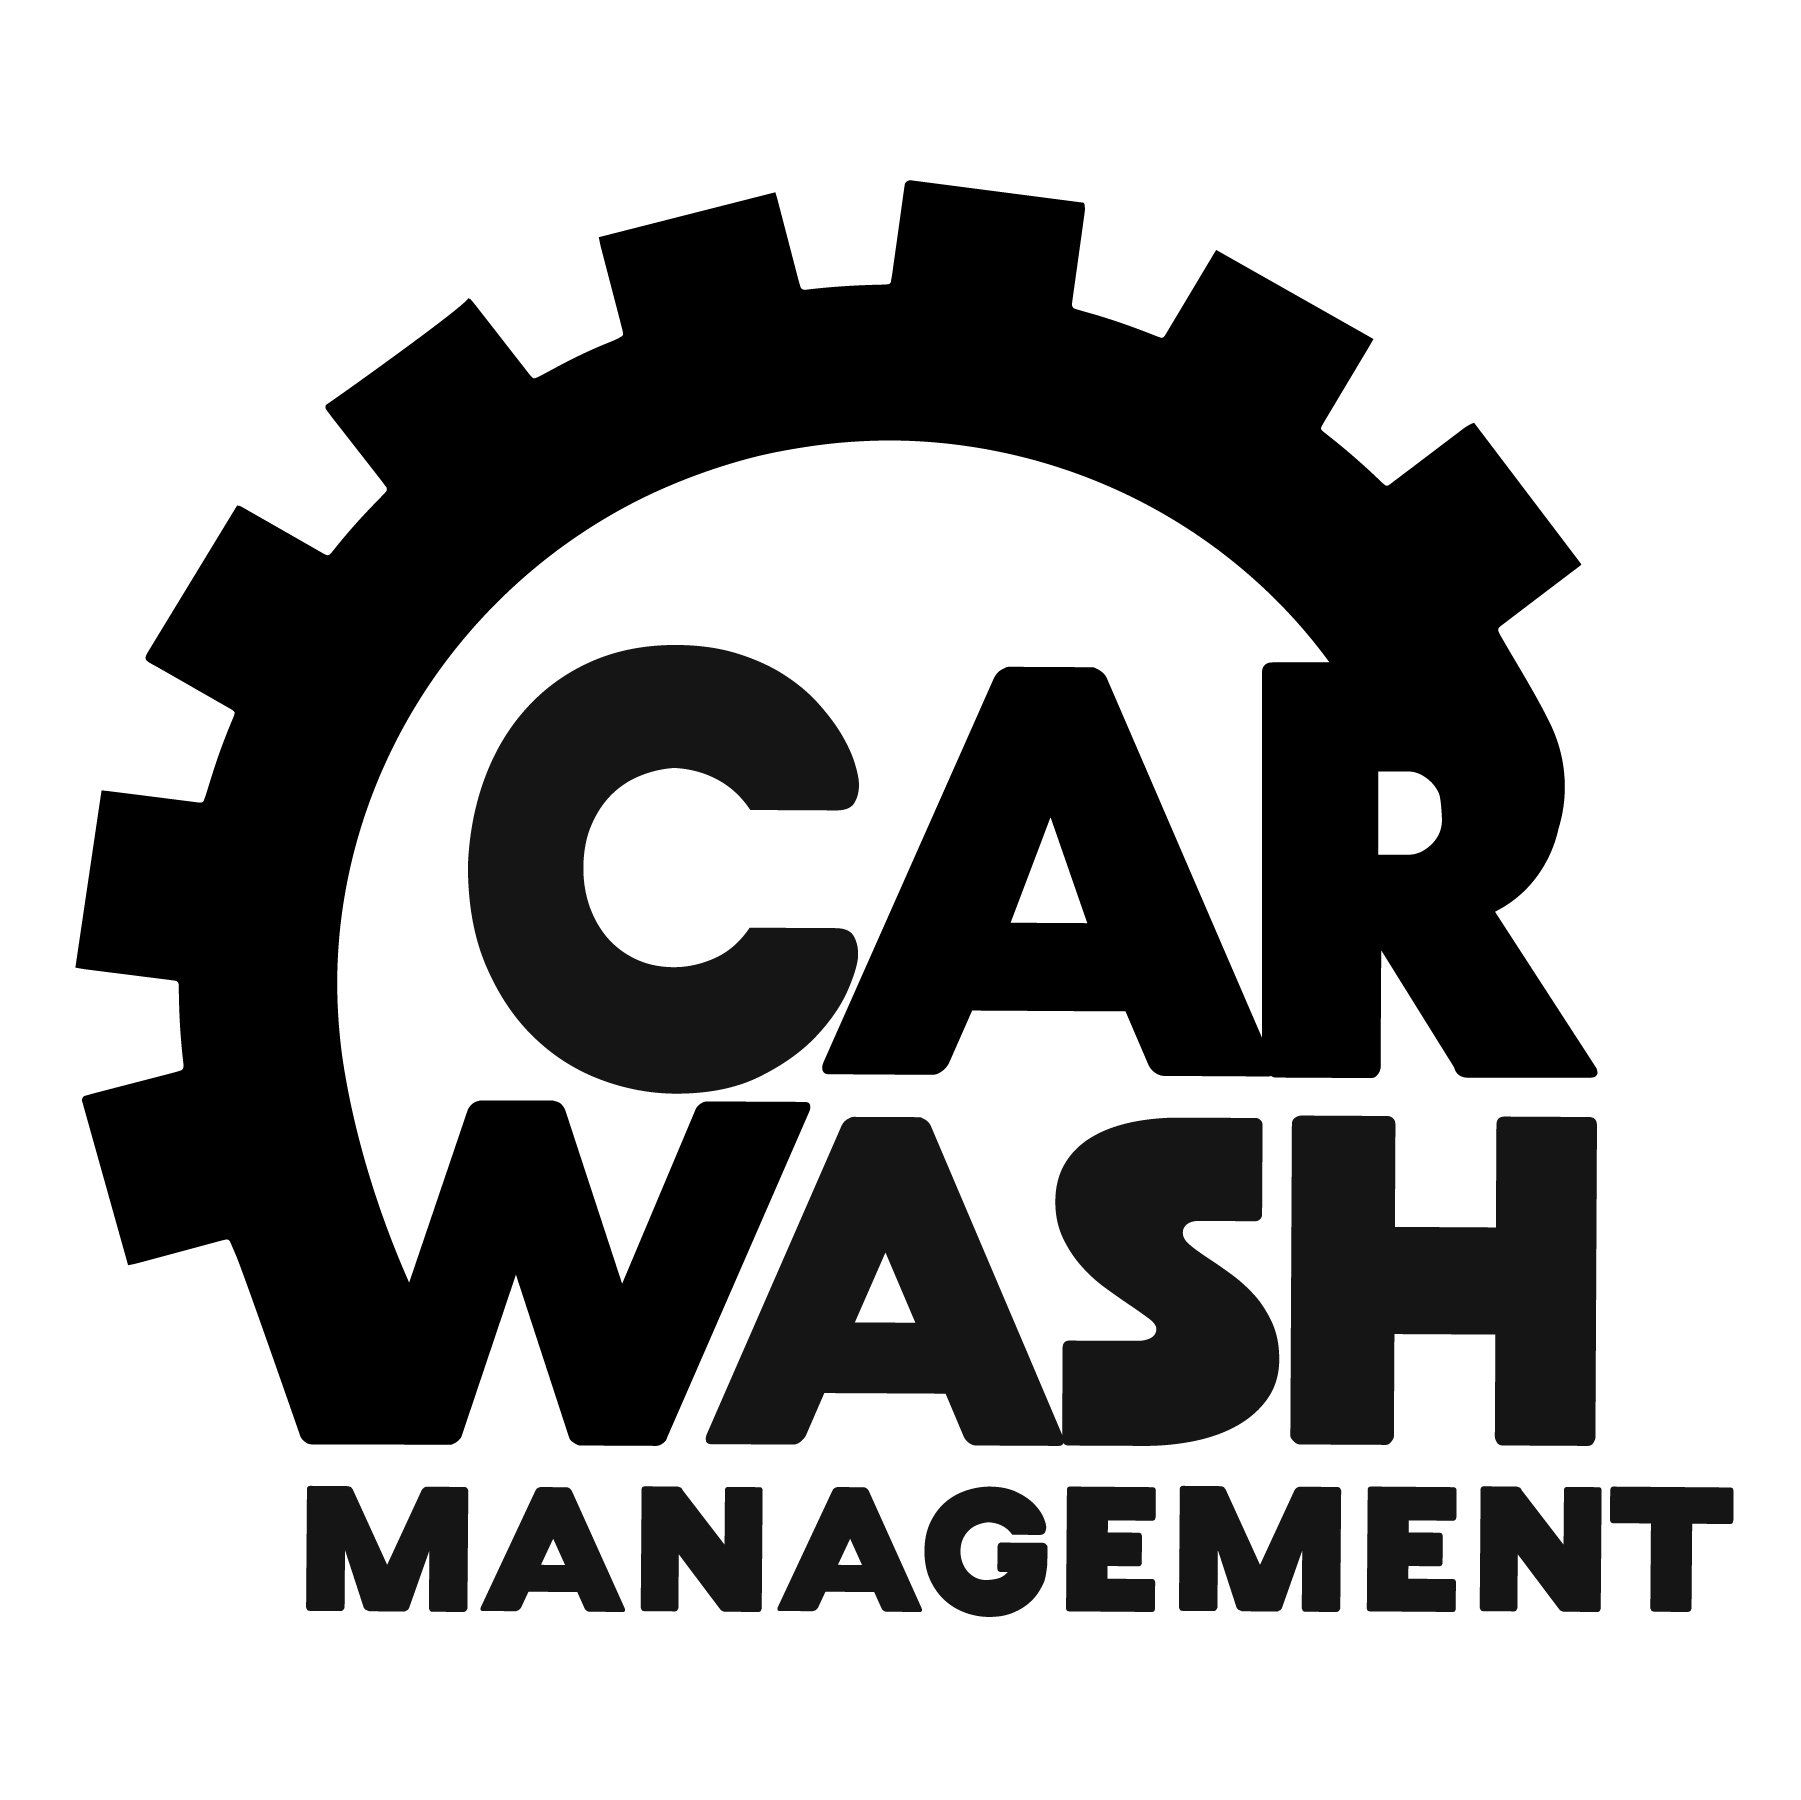 Car Wash MGMT carwash management car wash logo